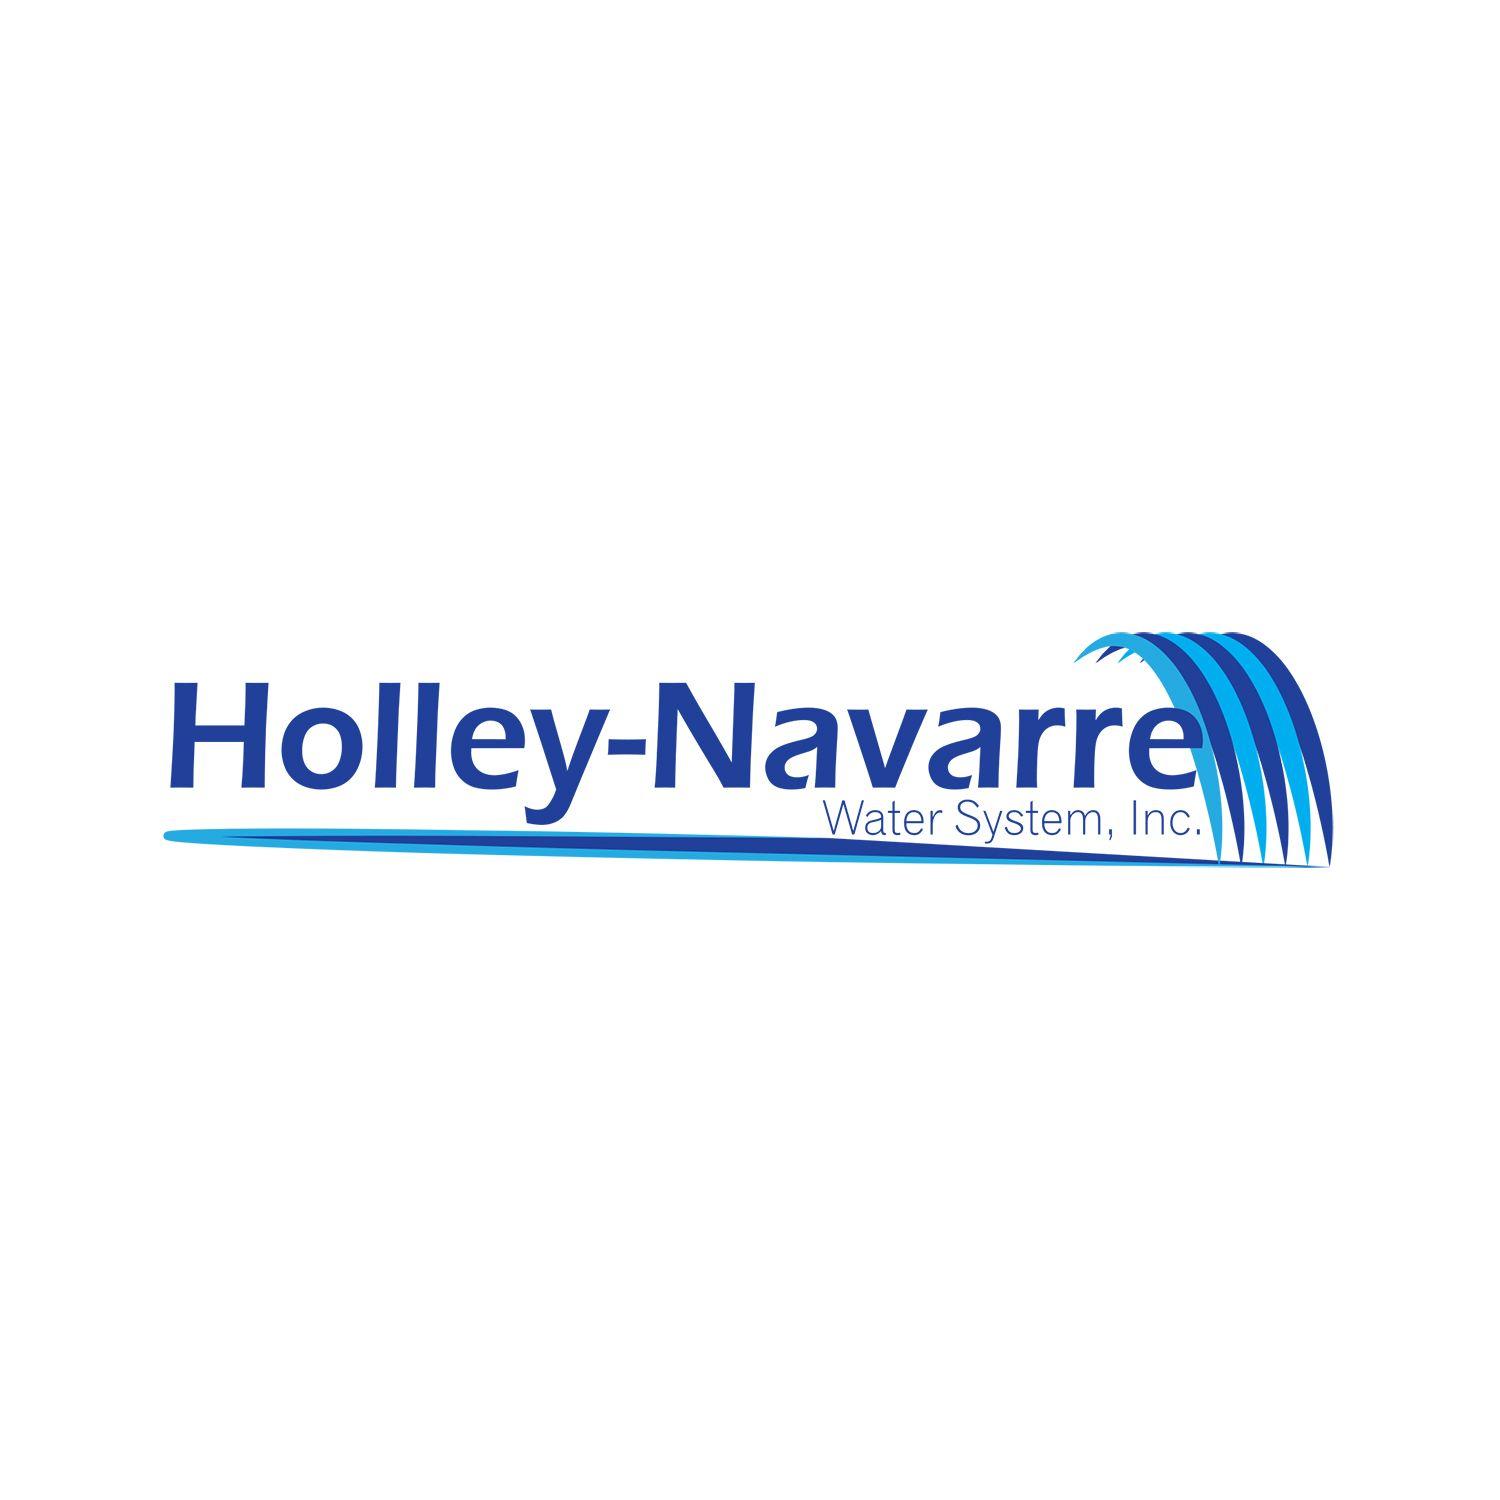 Navarre Logo - Modern, Professional, Water Company Logo Design For Holley Navarre